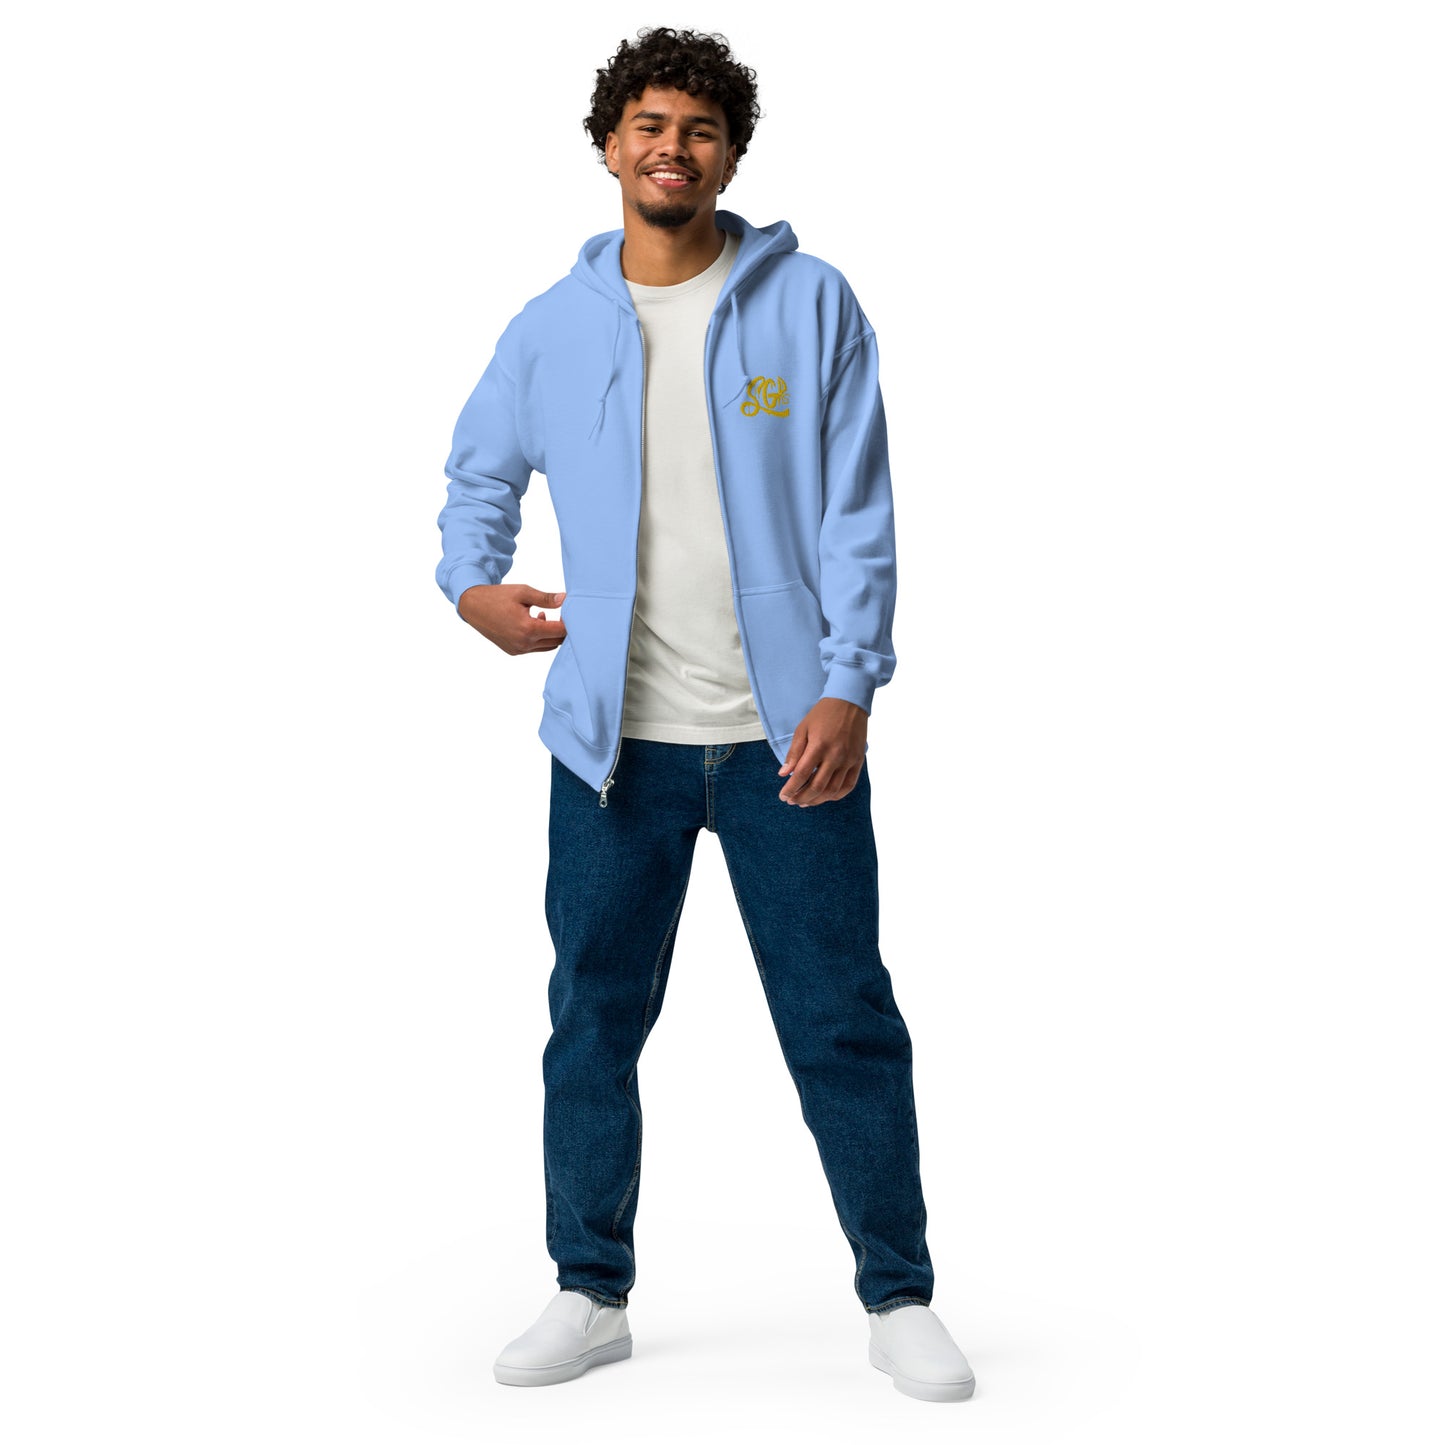 Same Goals Different Struggles Men’s blend zip hoodie